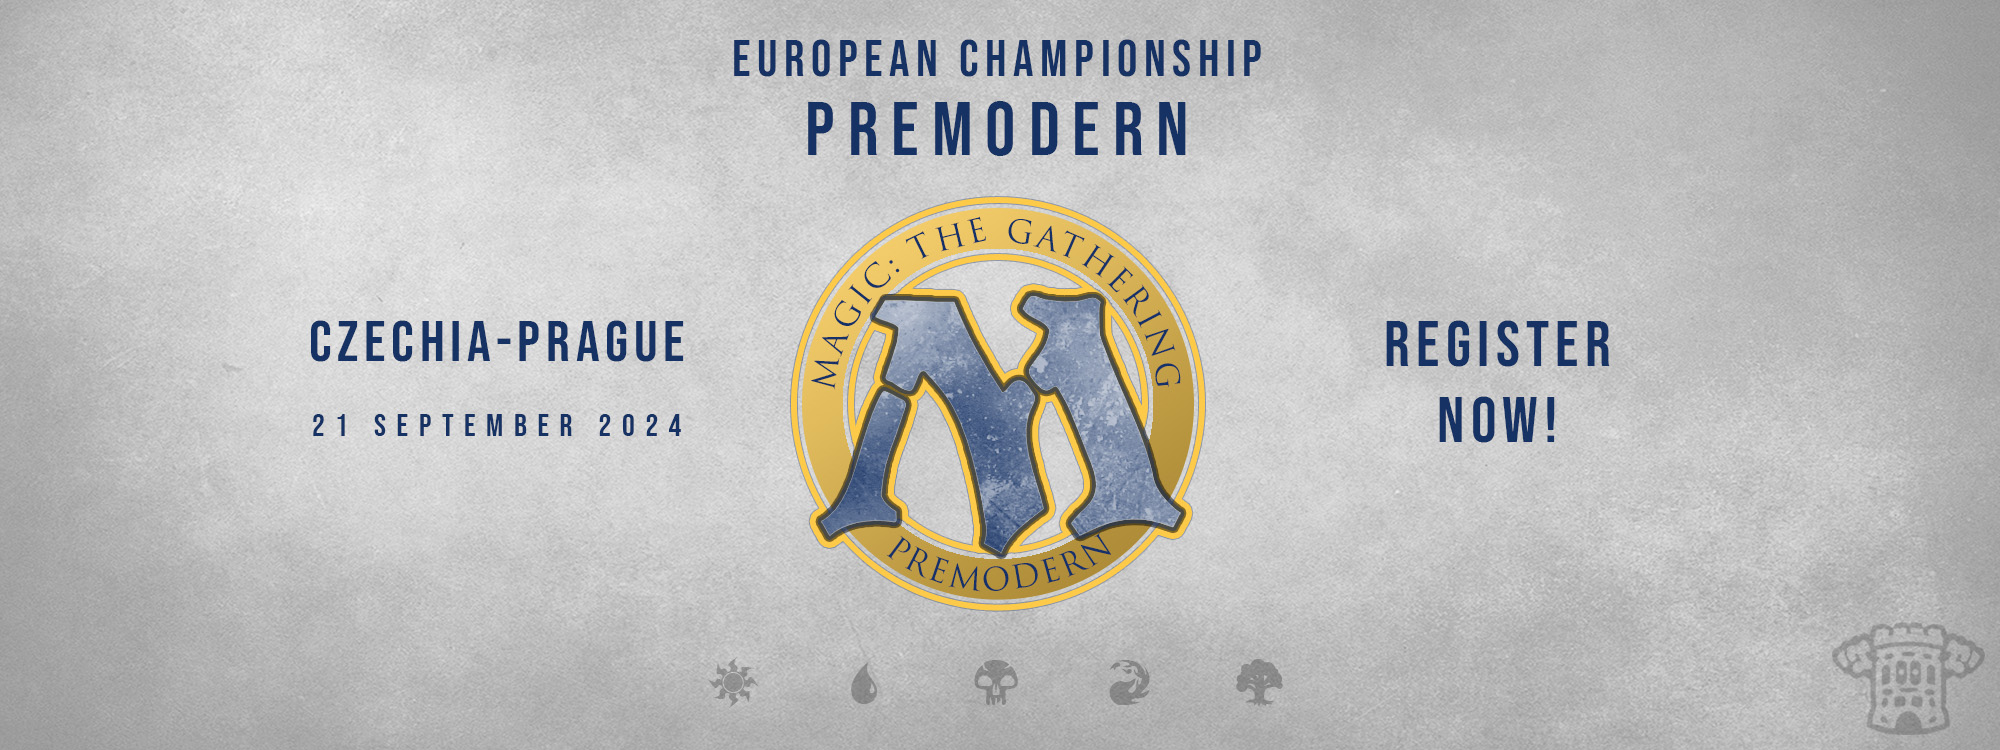 Premodern European Championship 2024